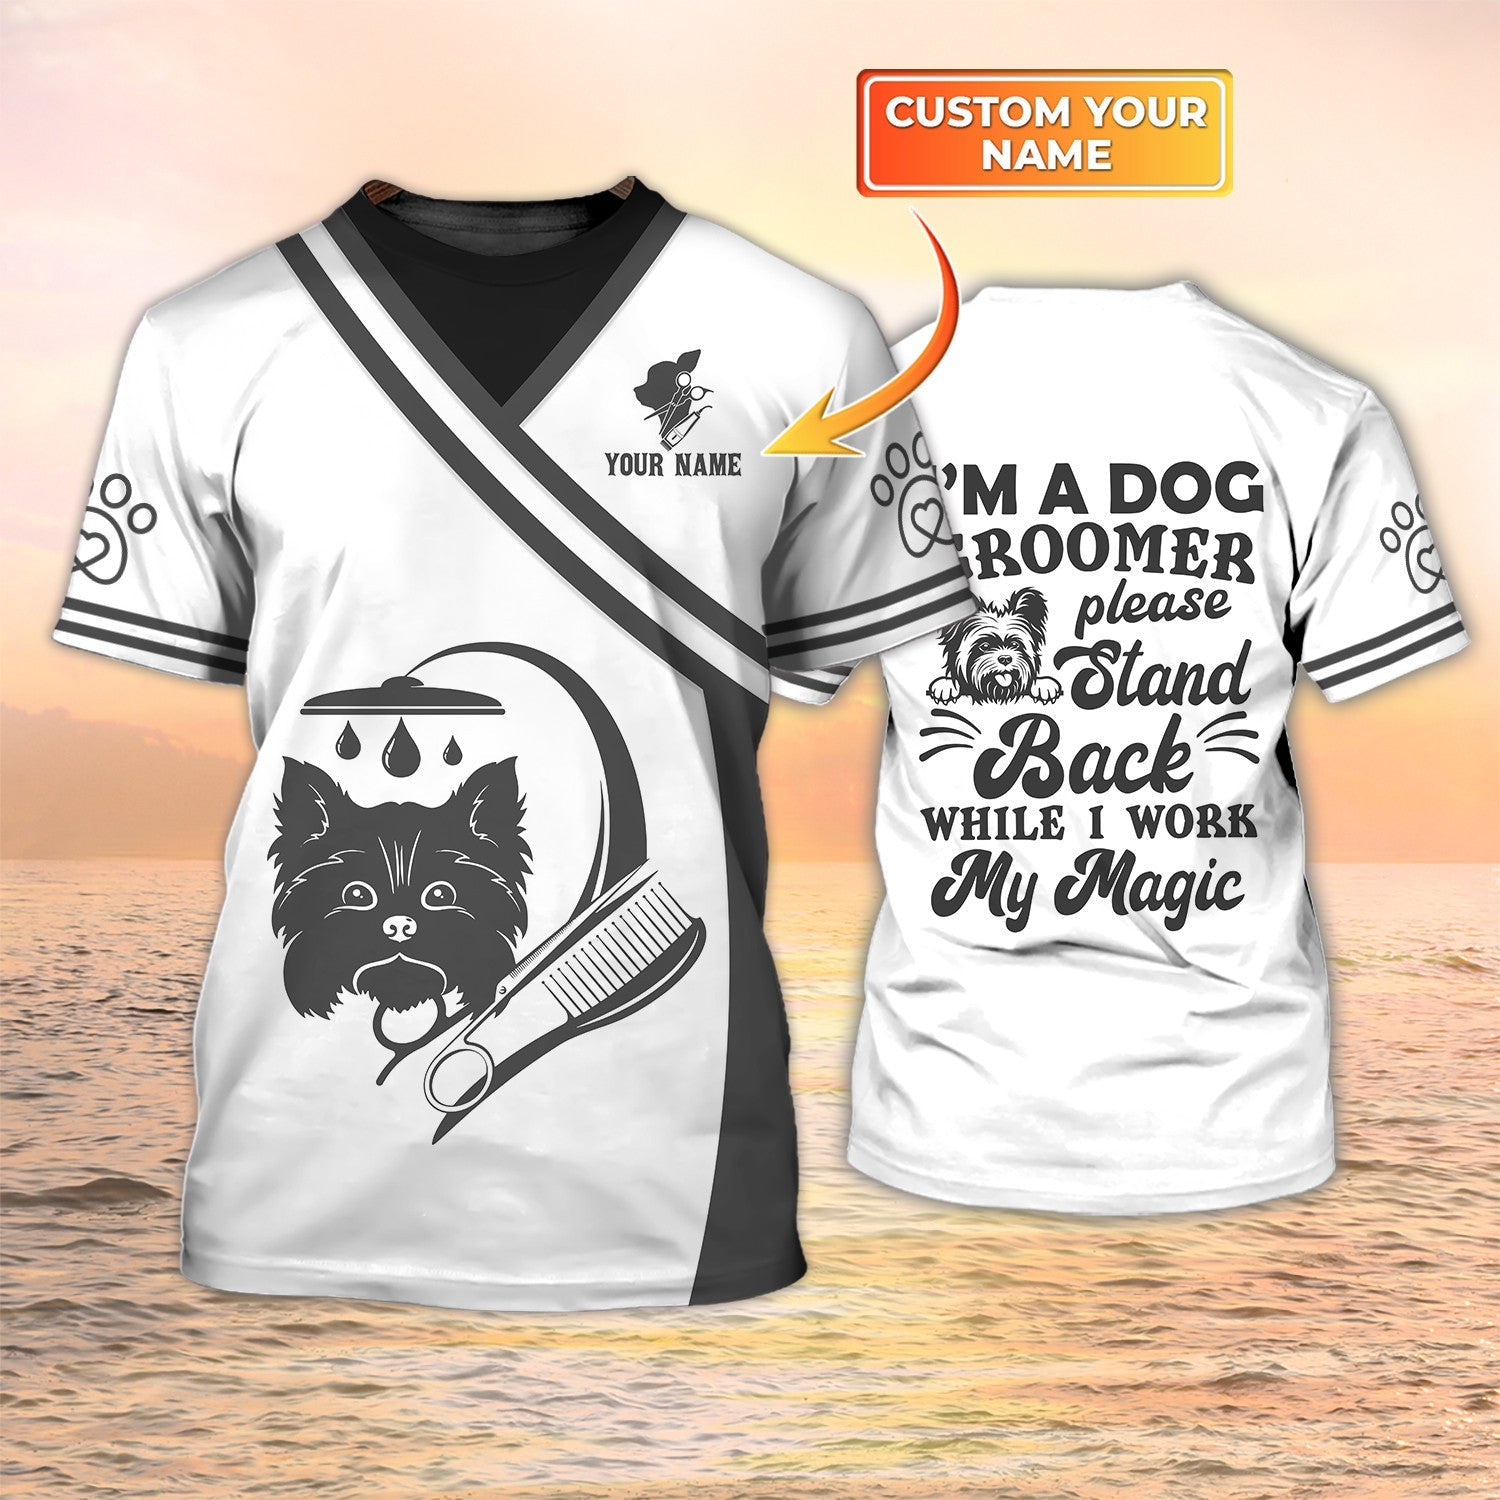 Dog Groomer Shirts Grooming Custom T Shirt Grooming Apparel Pet Salon Uniform